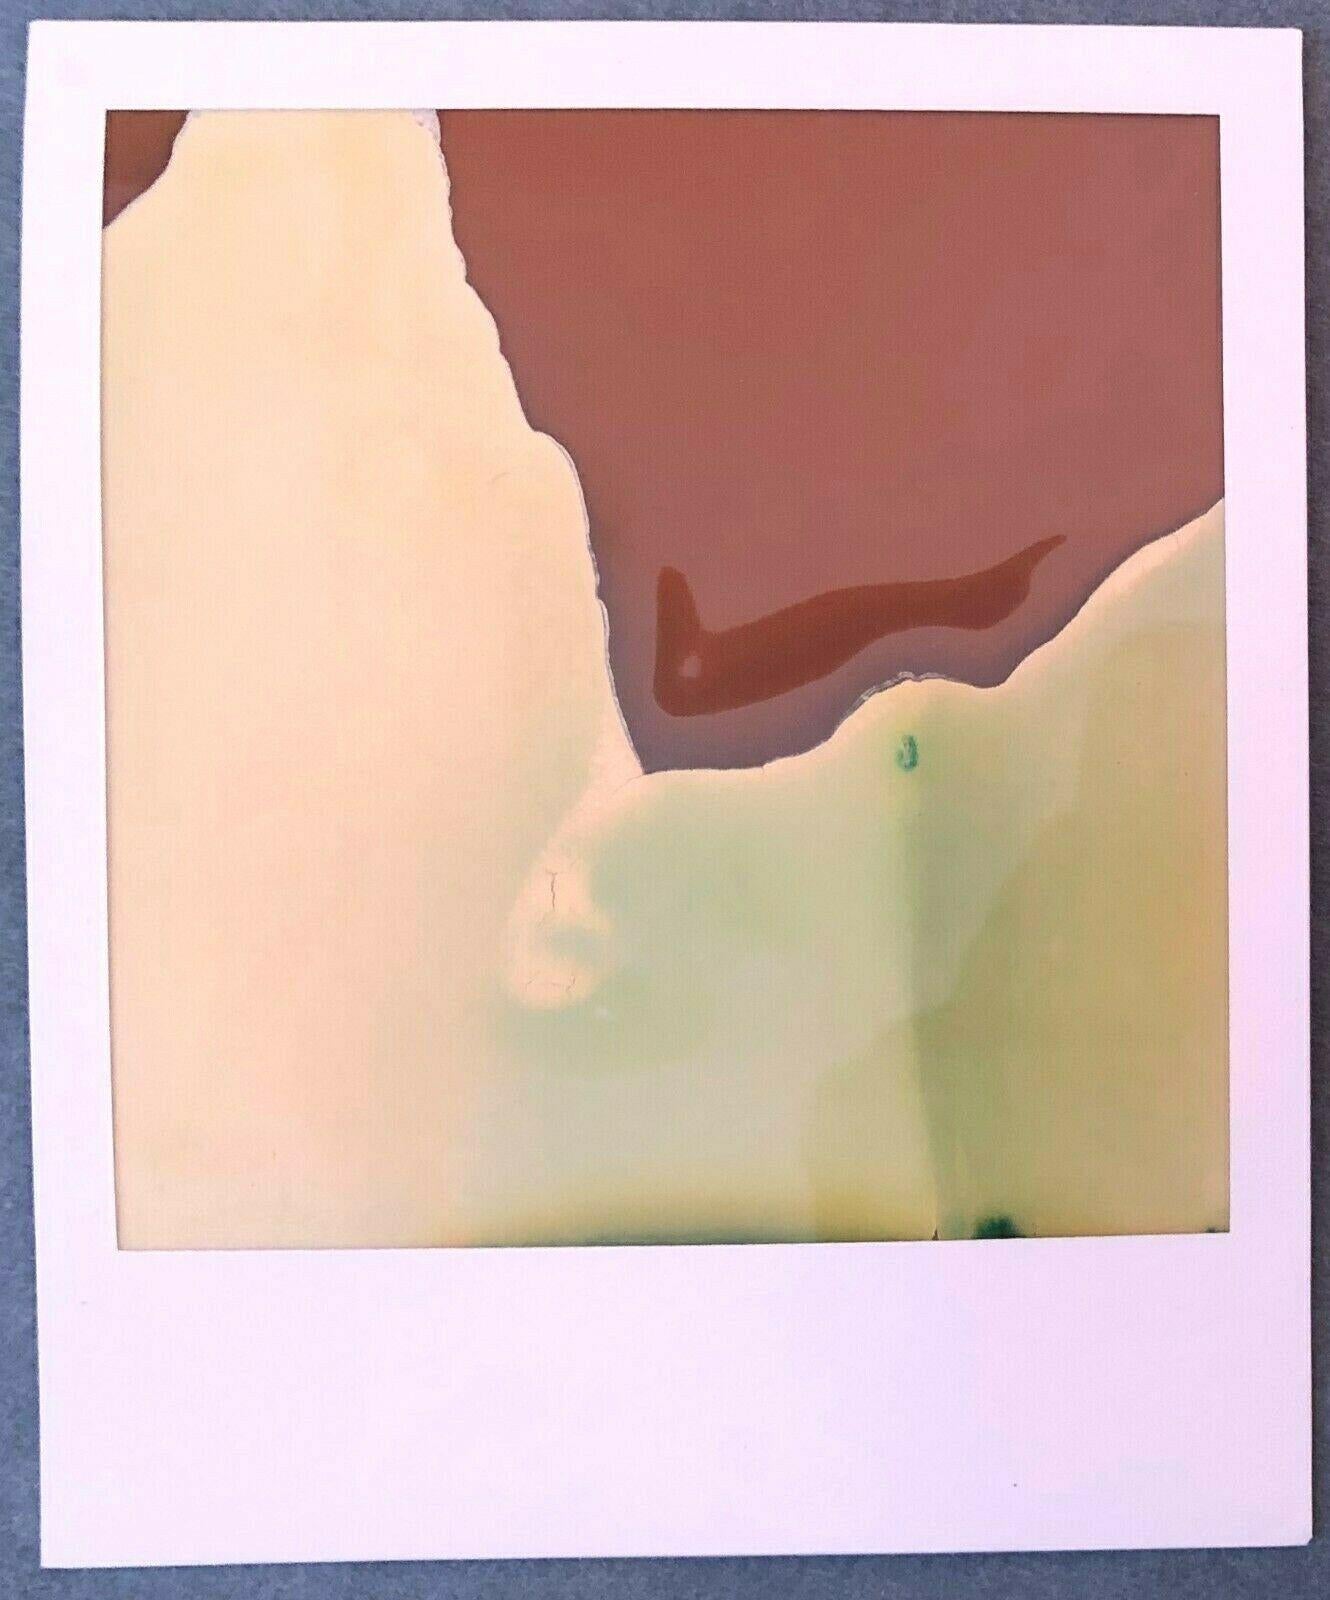 Jules and Jim - abstract, diptych- 2 Original Polaroids - Unique Pieces - Photograph by Stefanie Schneider